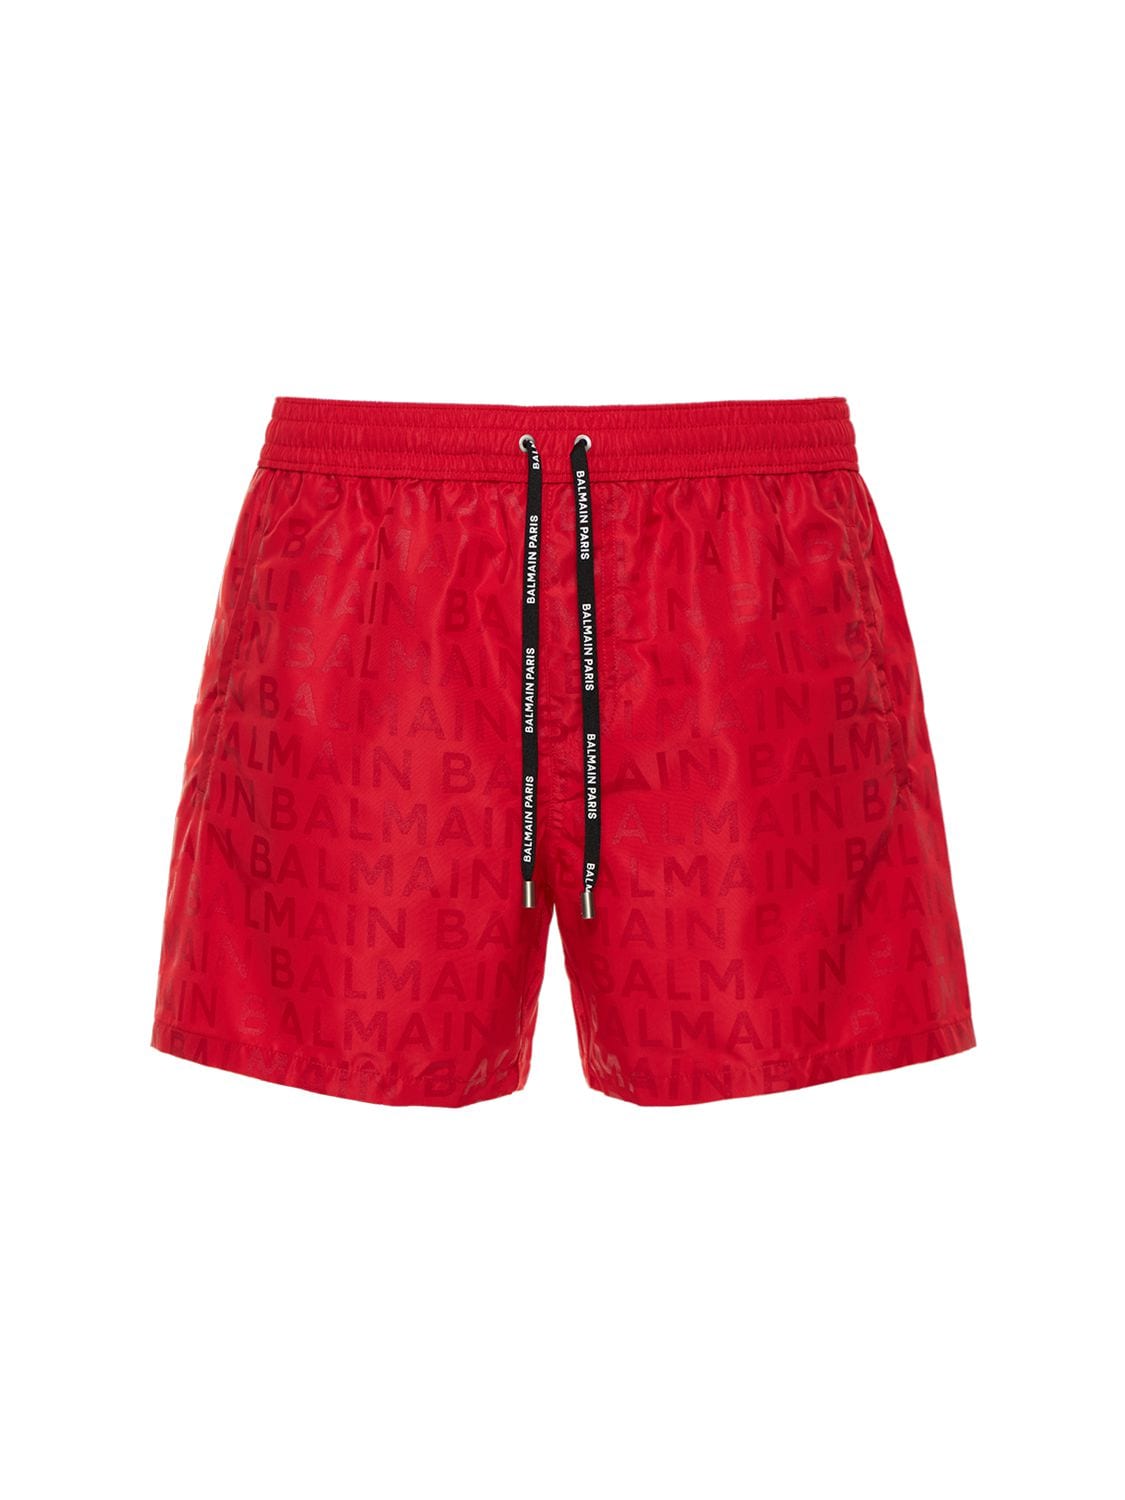 Balmain Underwear Logo Printed Nylon Swim Shorts In Red